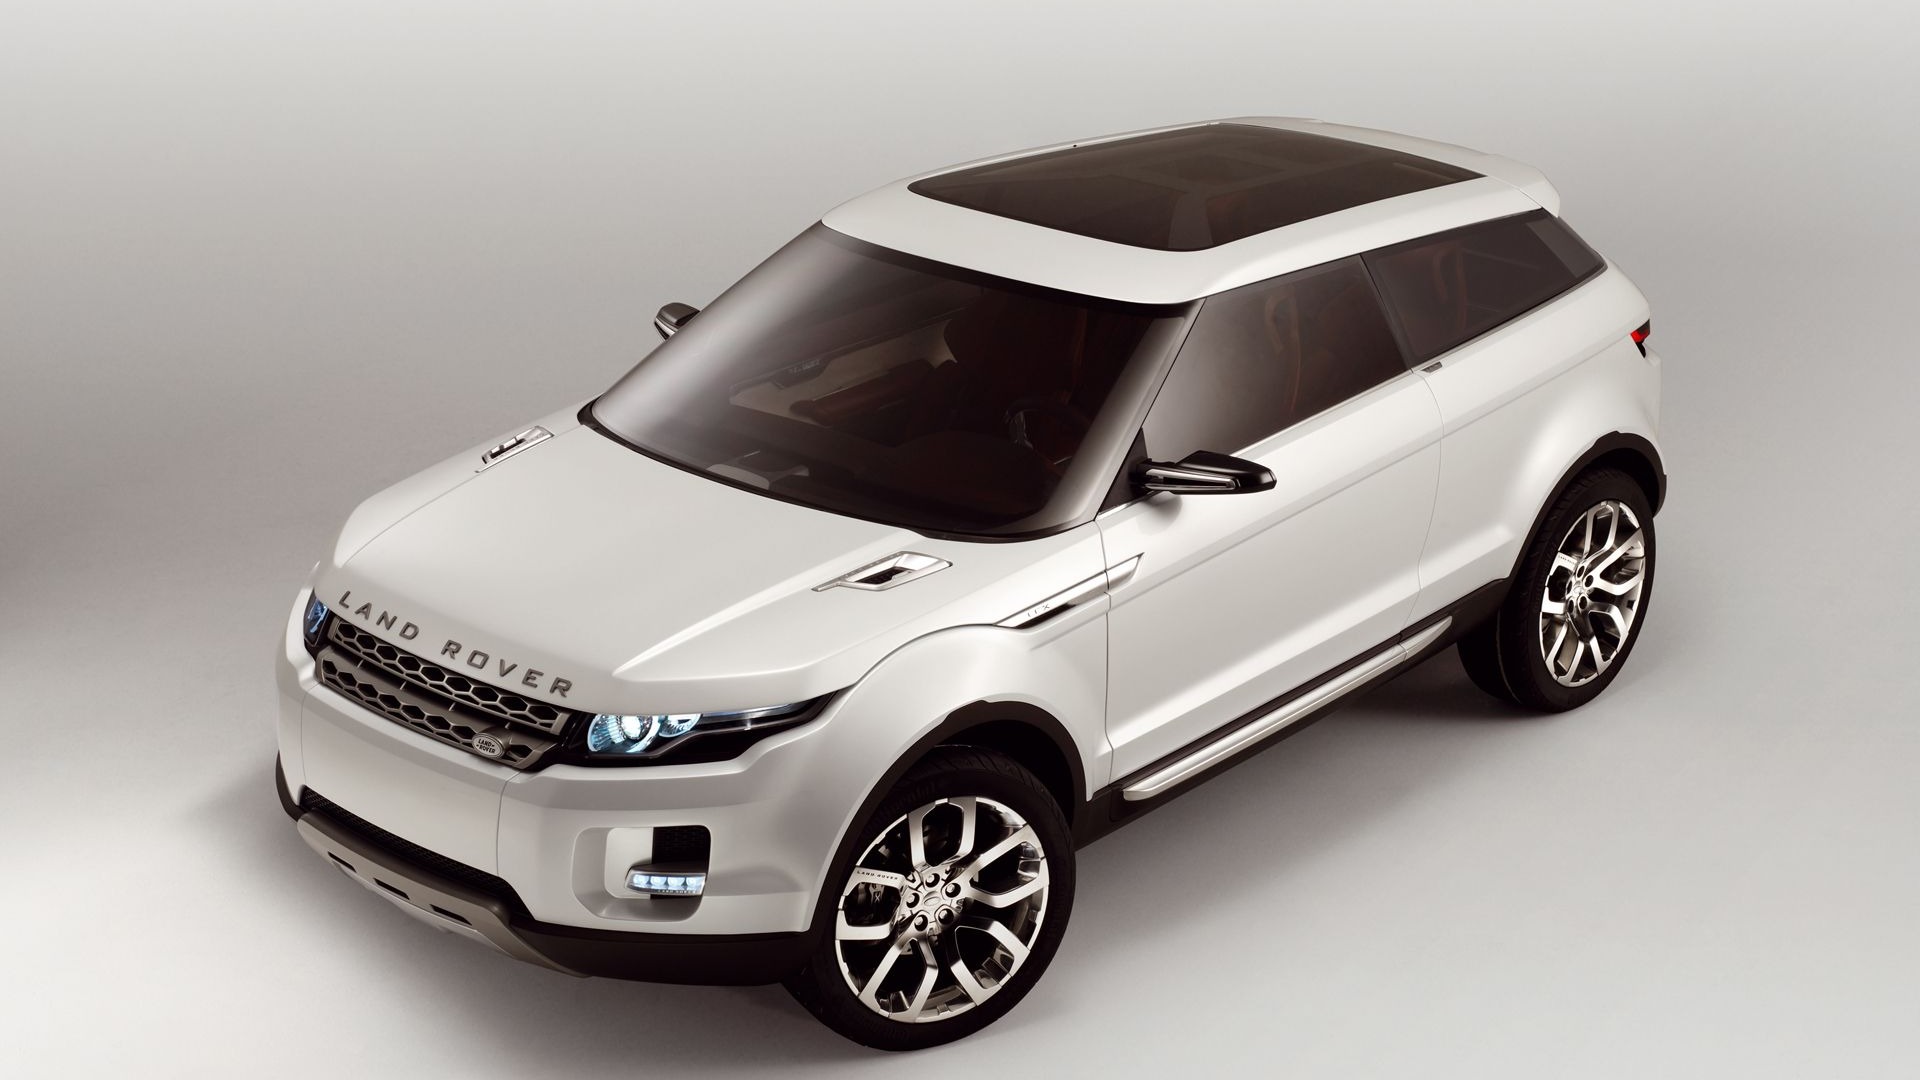 Land Rover fonds d'écran 2011 (1) #12 - 1920x1080